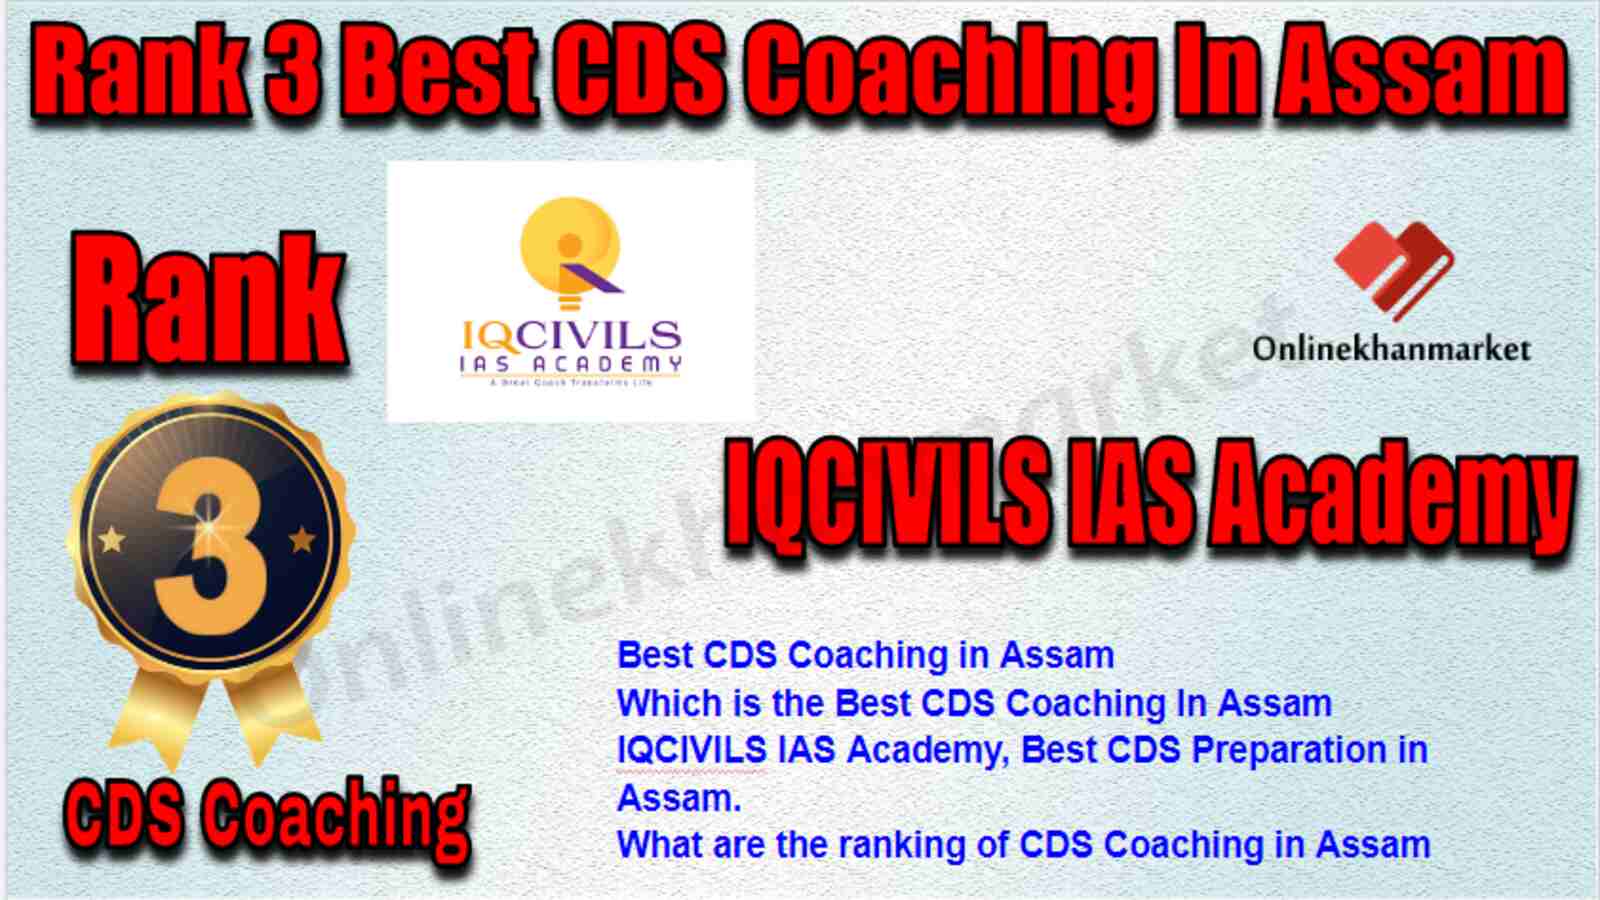 Rank 3 Best CDS Coaching in Assam